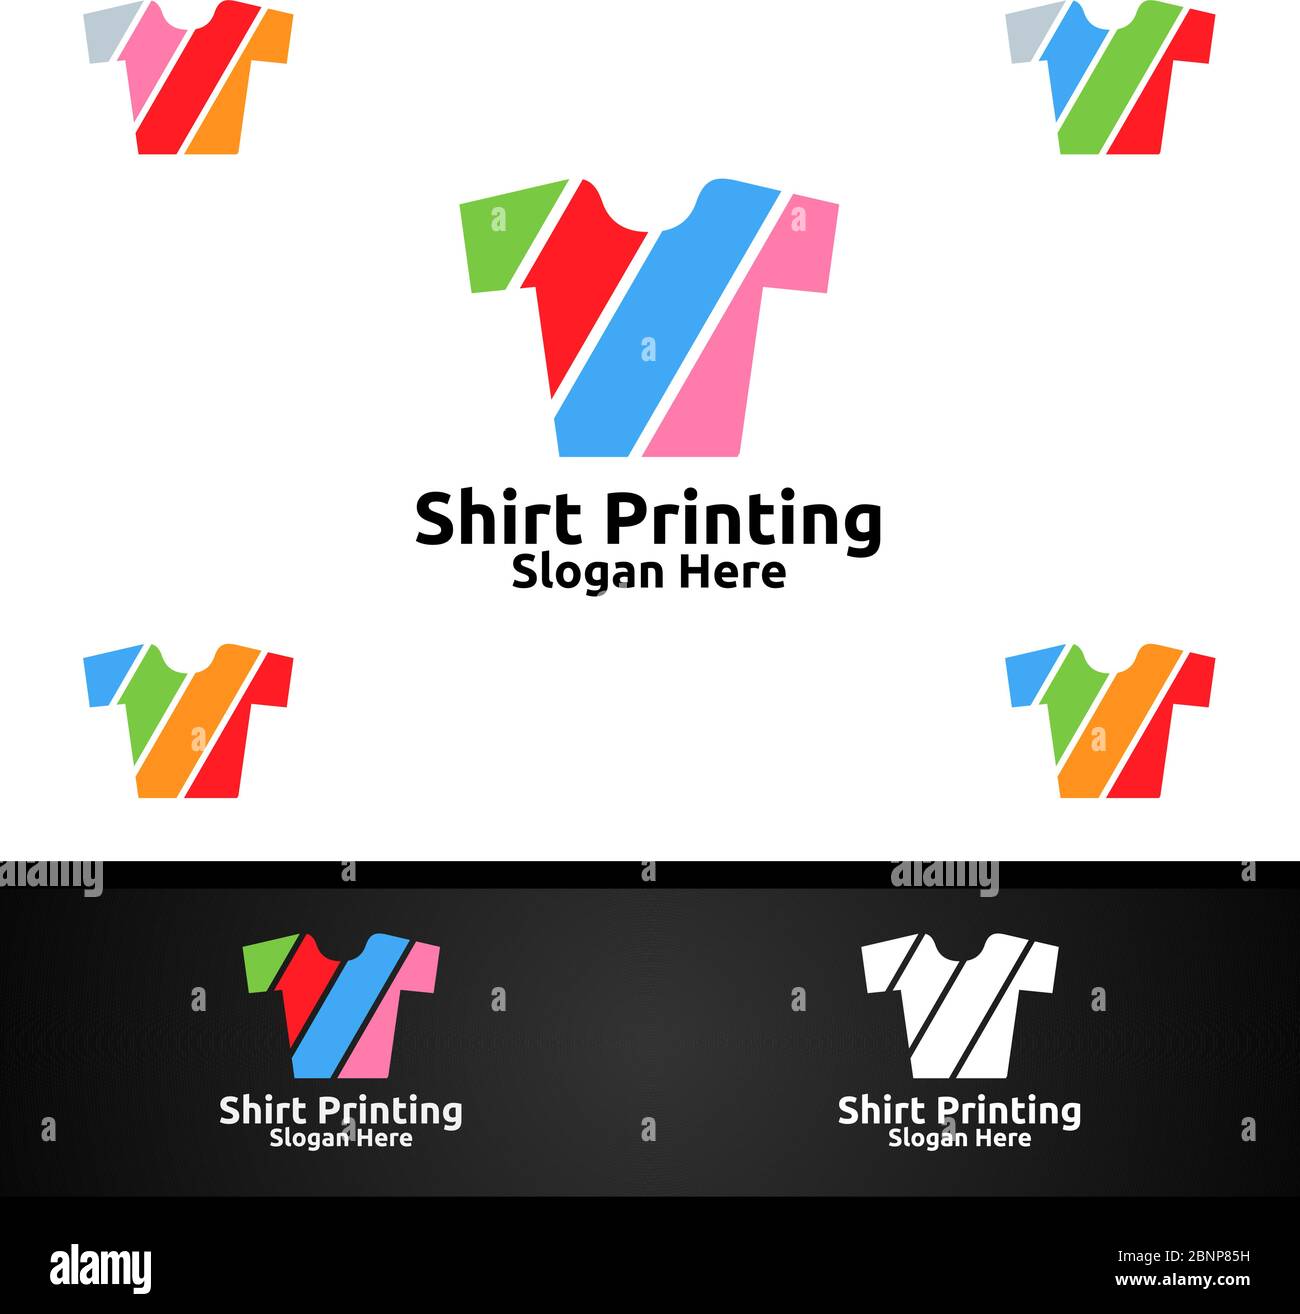 T shirt Printing Company Vector Logo Design for Laundry, T shirt shop ...